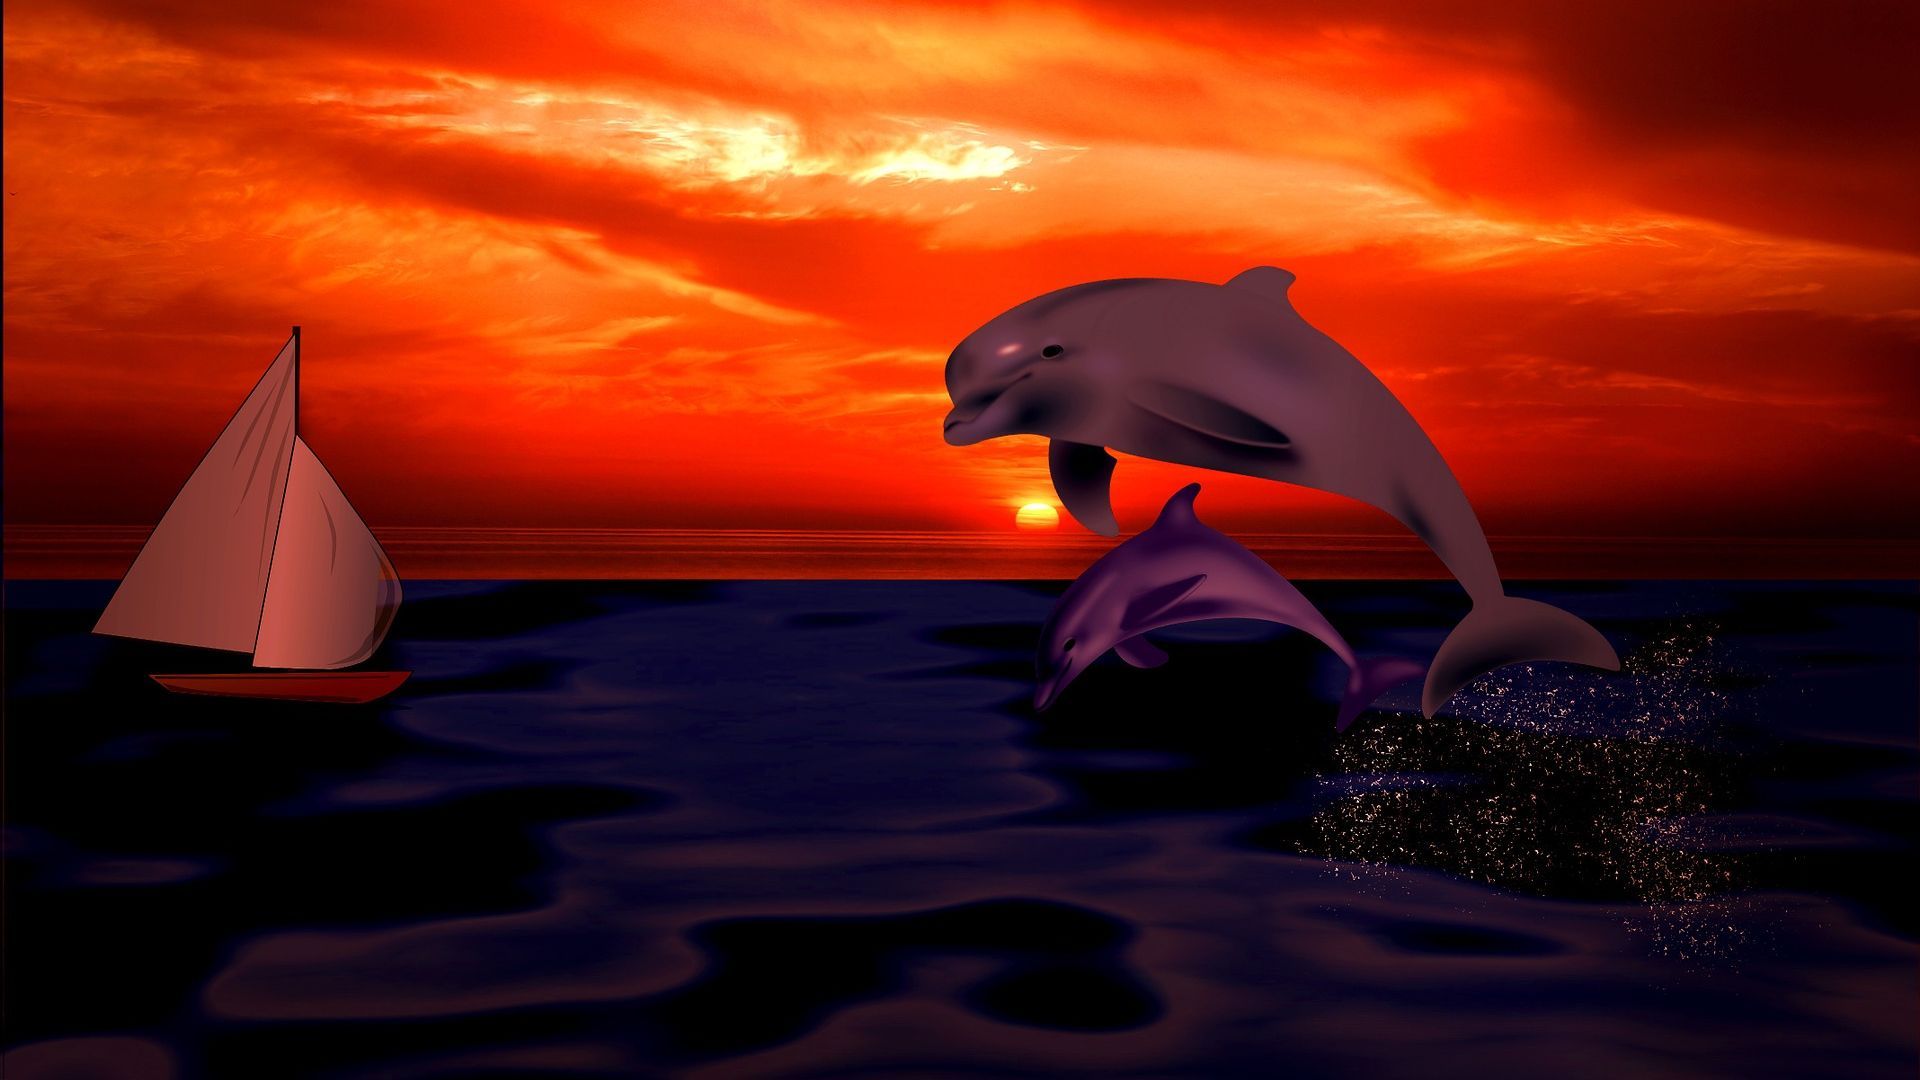 Dolphin Sunset Art Free Download Image .mewallpaper.com